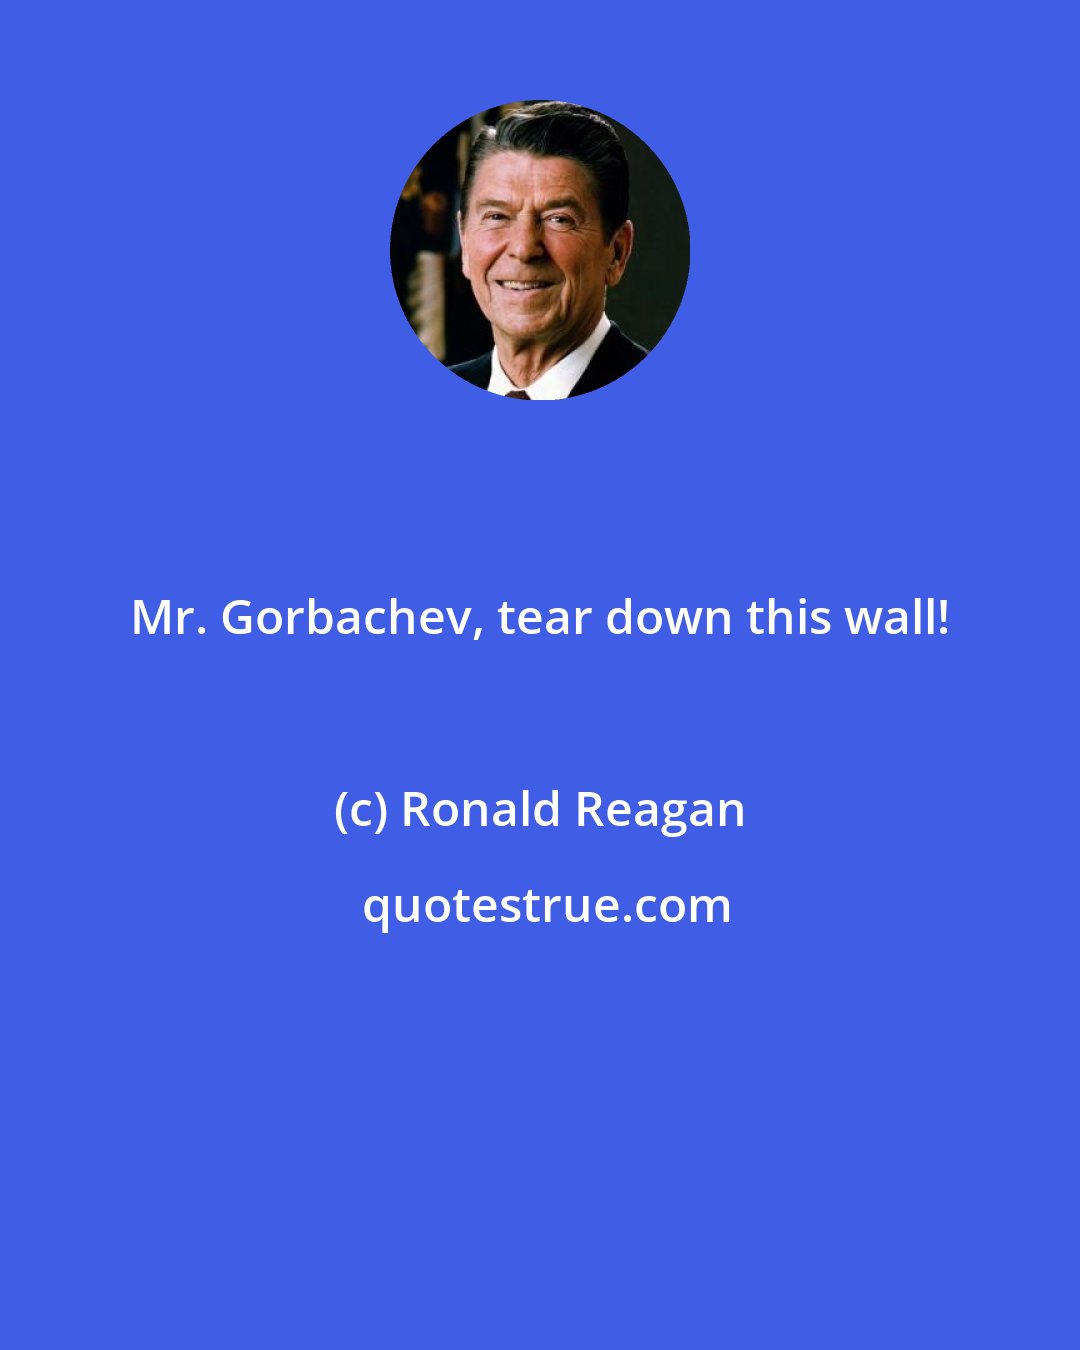 Ronald Reagan: Mr. Gorbachev, tear down this wall!